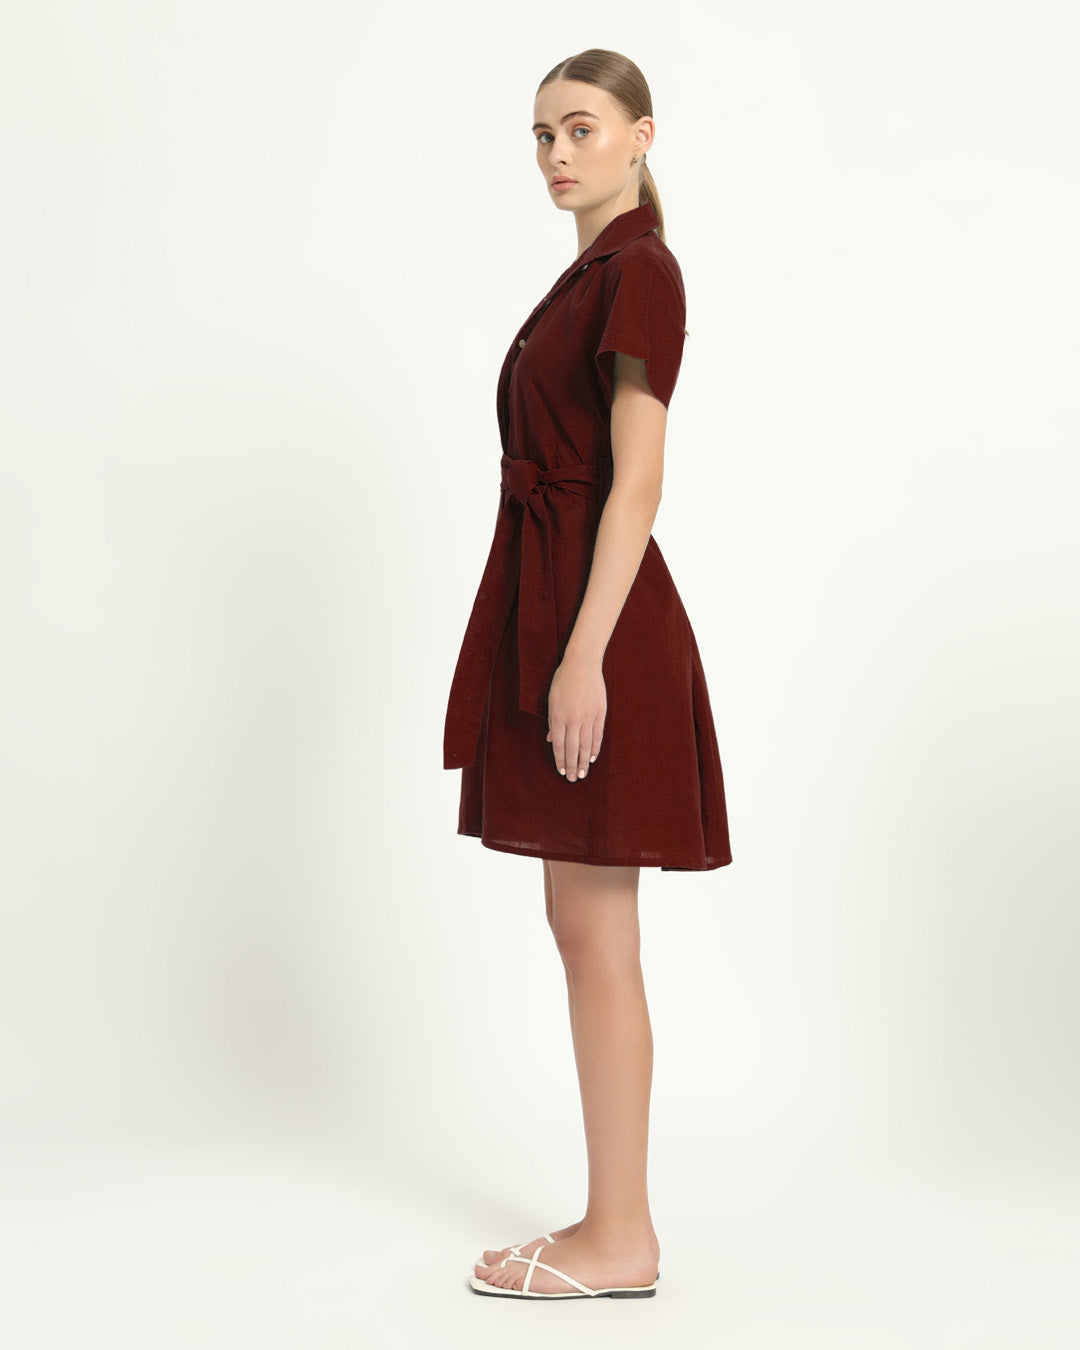 The Loretto Rouge Cotton Dress